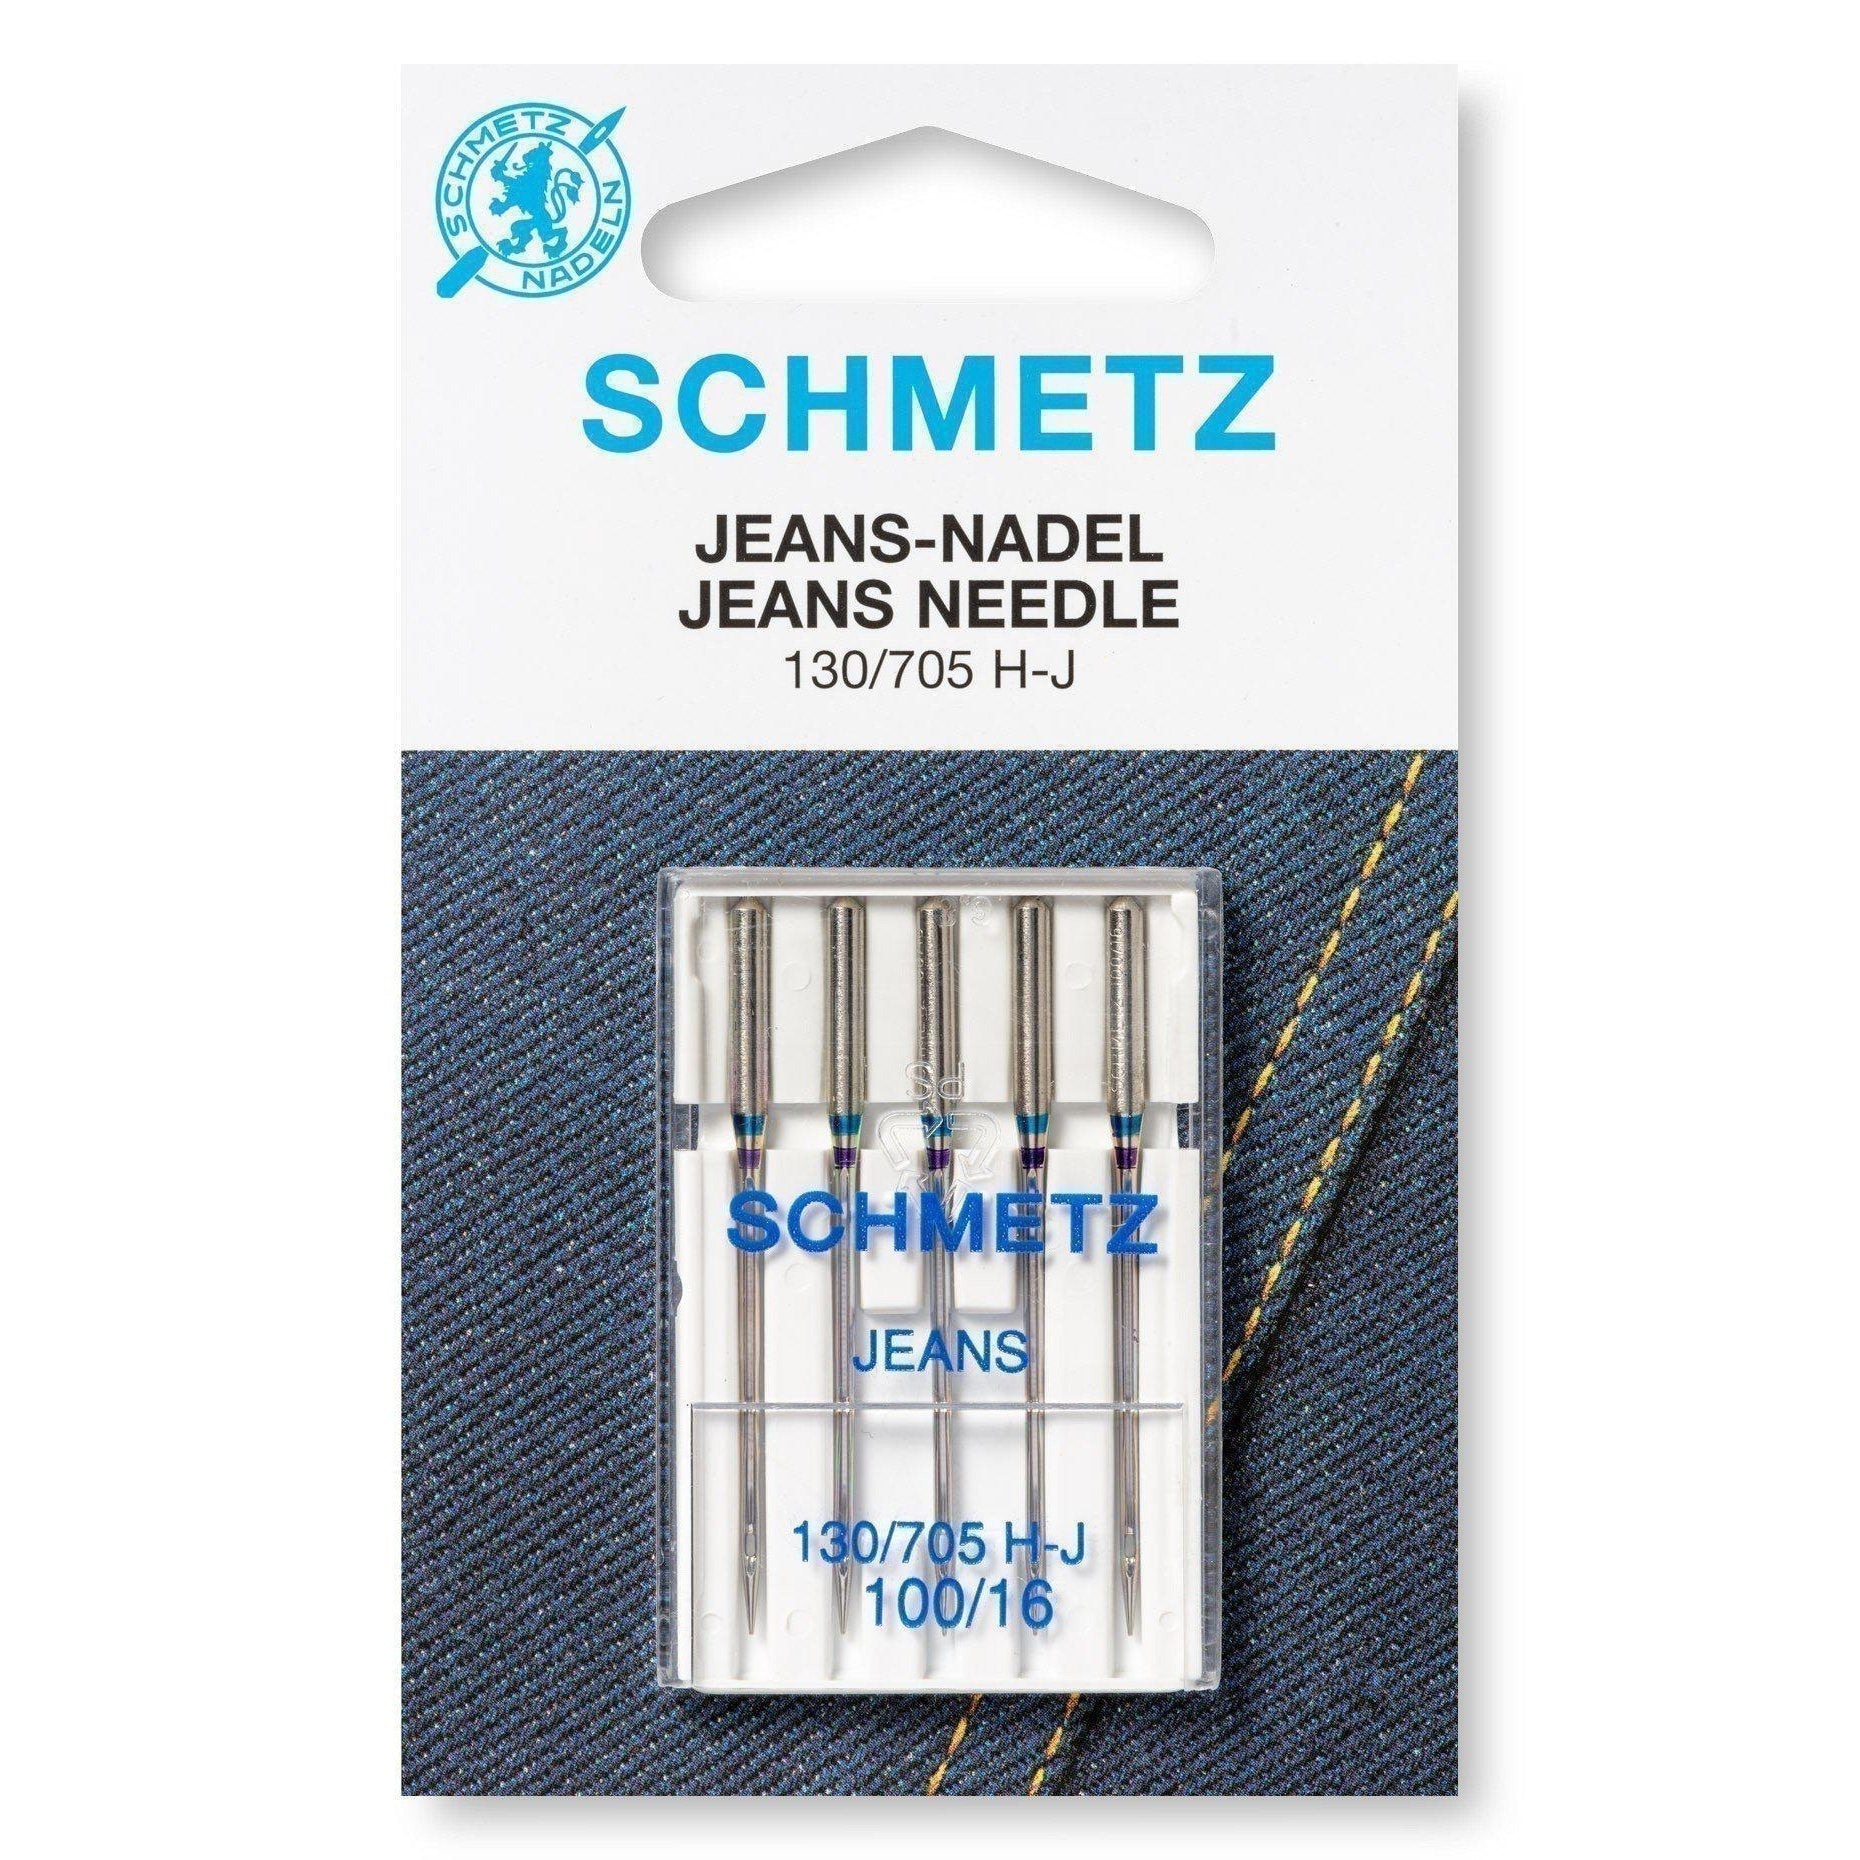 Schmetz-Jeans Needles 100/16-sewing notion-gather here online